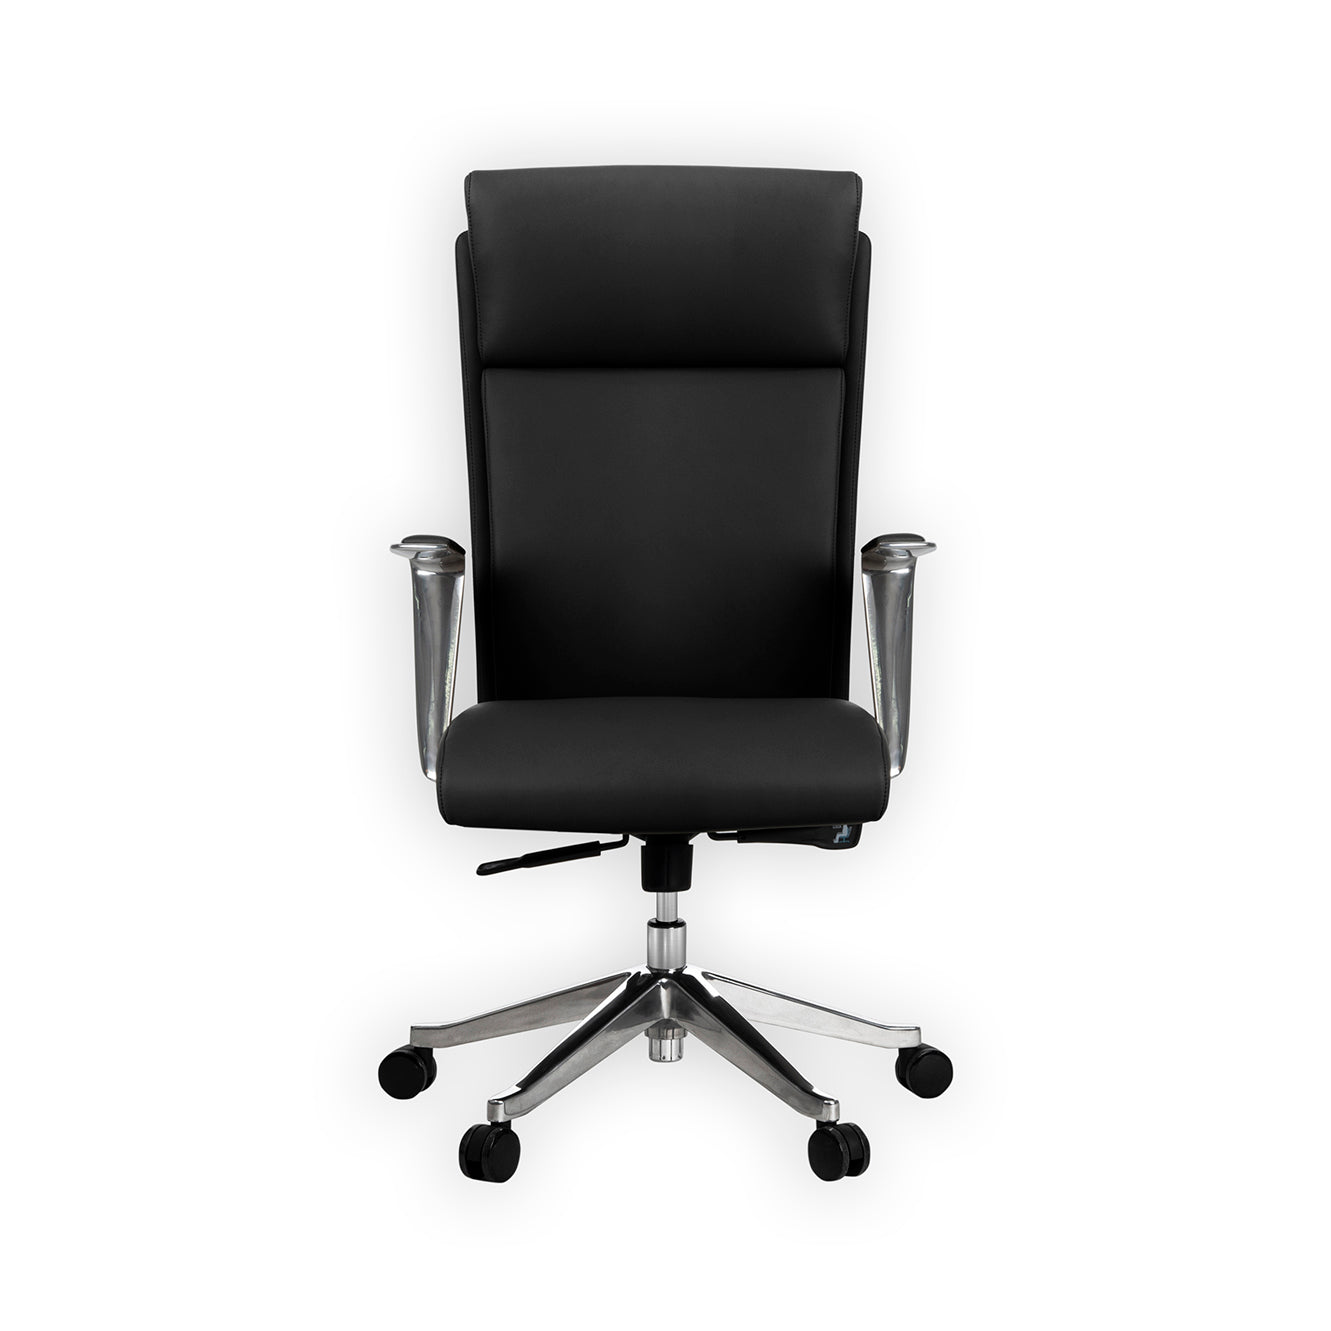 UJI Customer Chair - Black